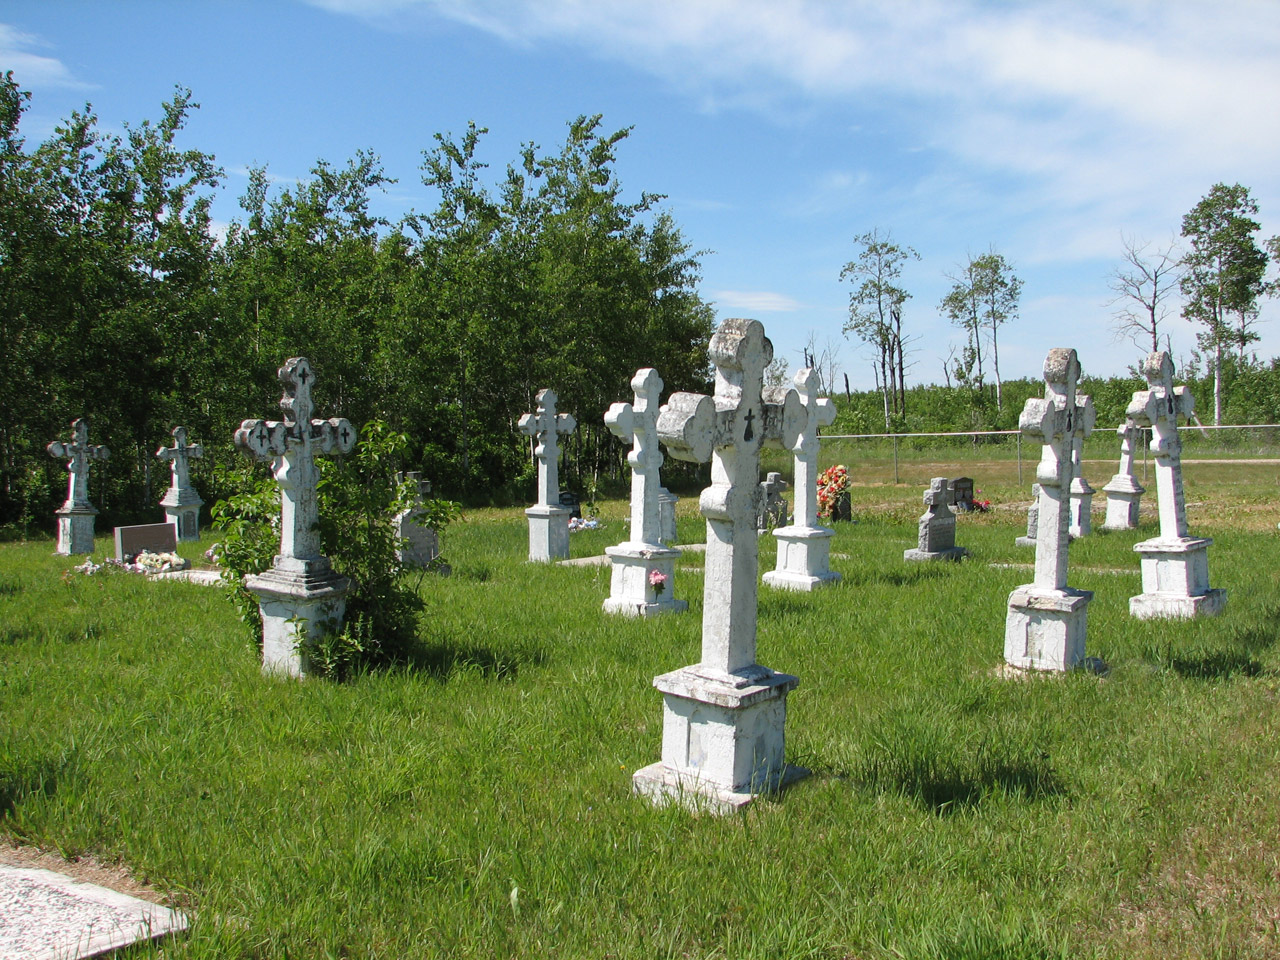 Beautiful rural graveyard cemetary